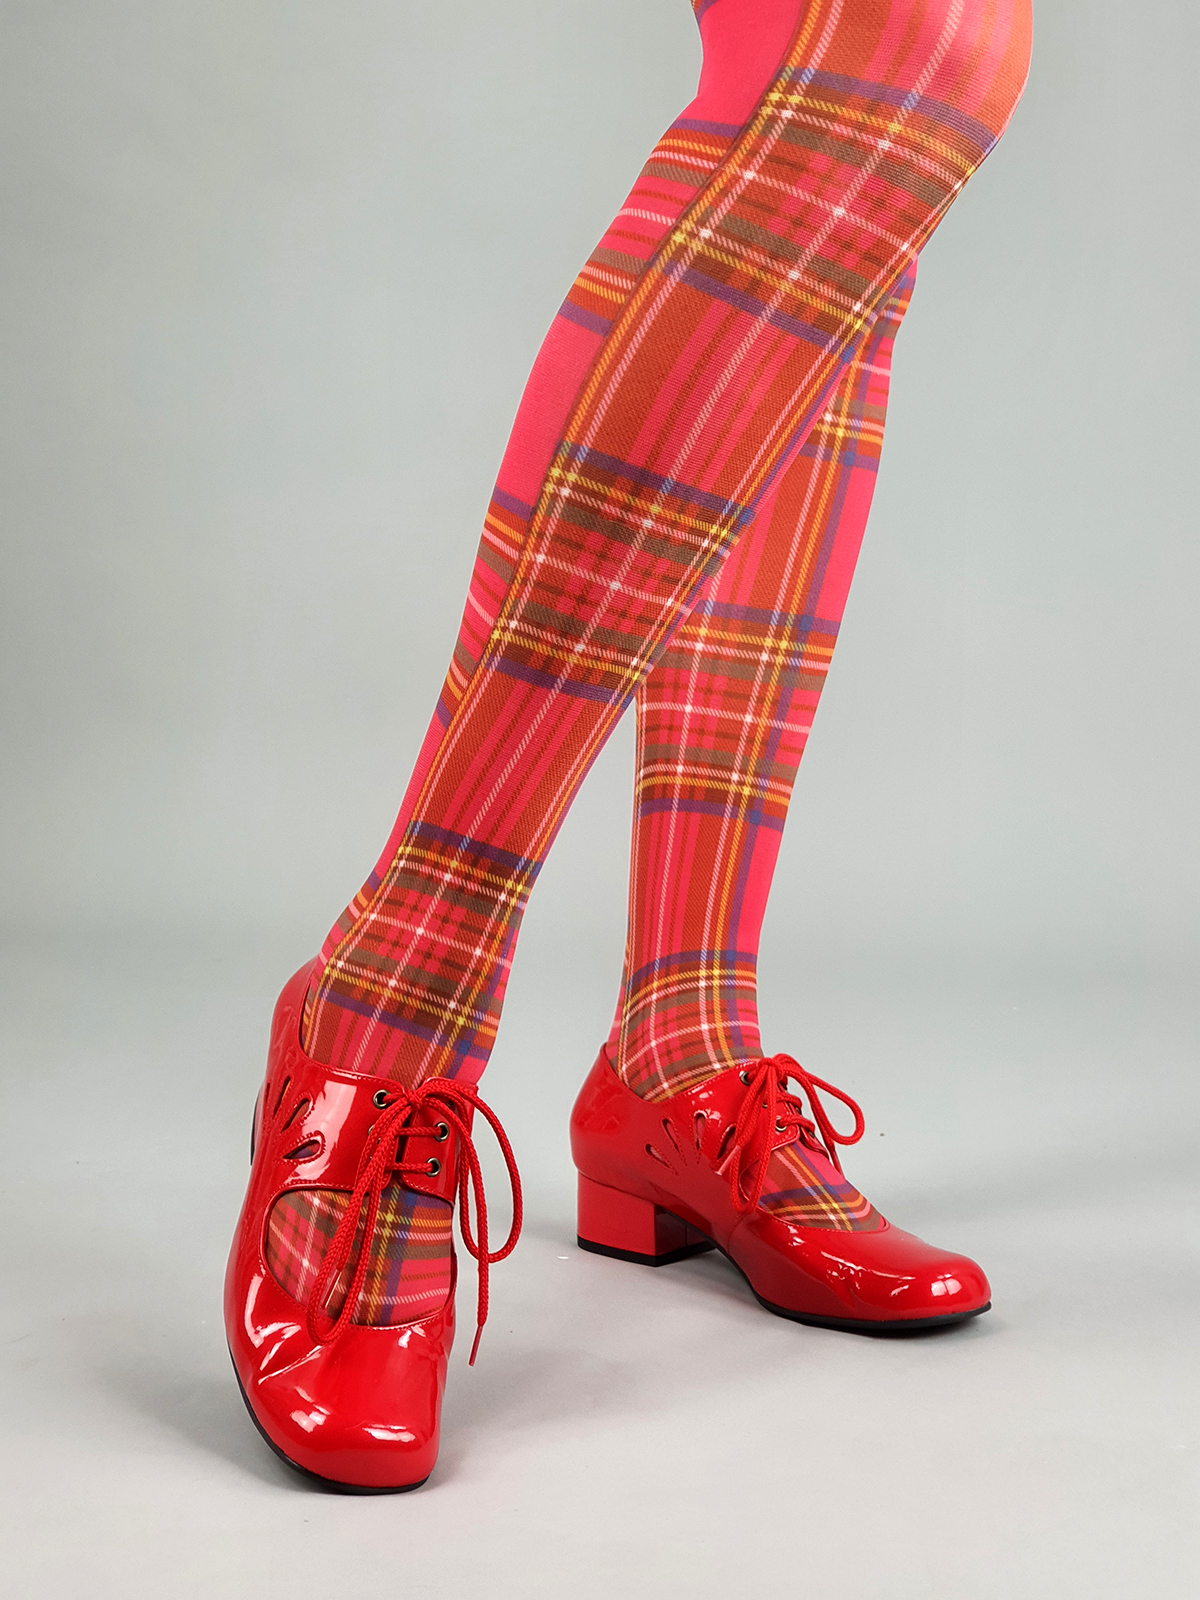 https://www.modshoes.co.uk/wp-content/uploads/2020/11/modshoes-ladies-vintage-retro-mod-skin-ska-tights20201119_193220.jpg